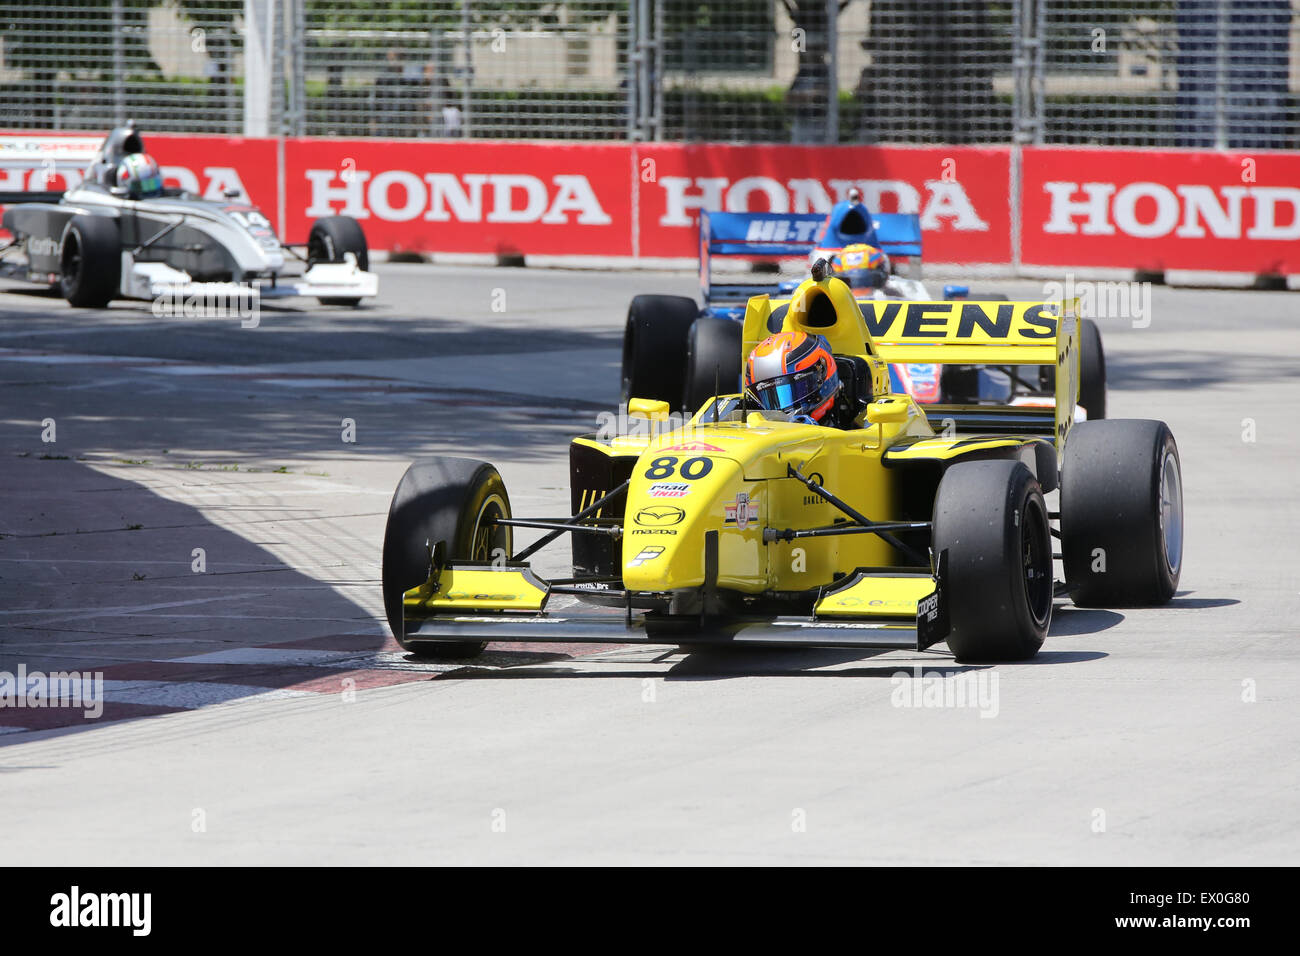 Honda Indy Car Rennen Stockfoto